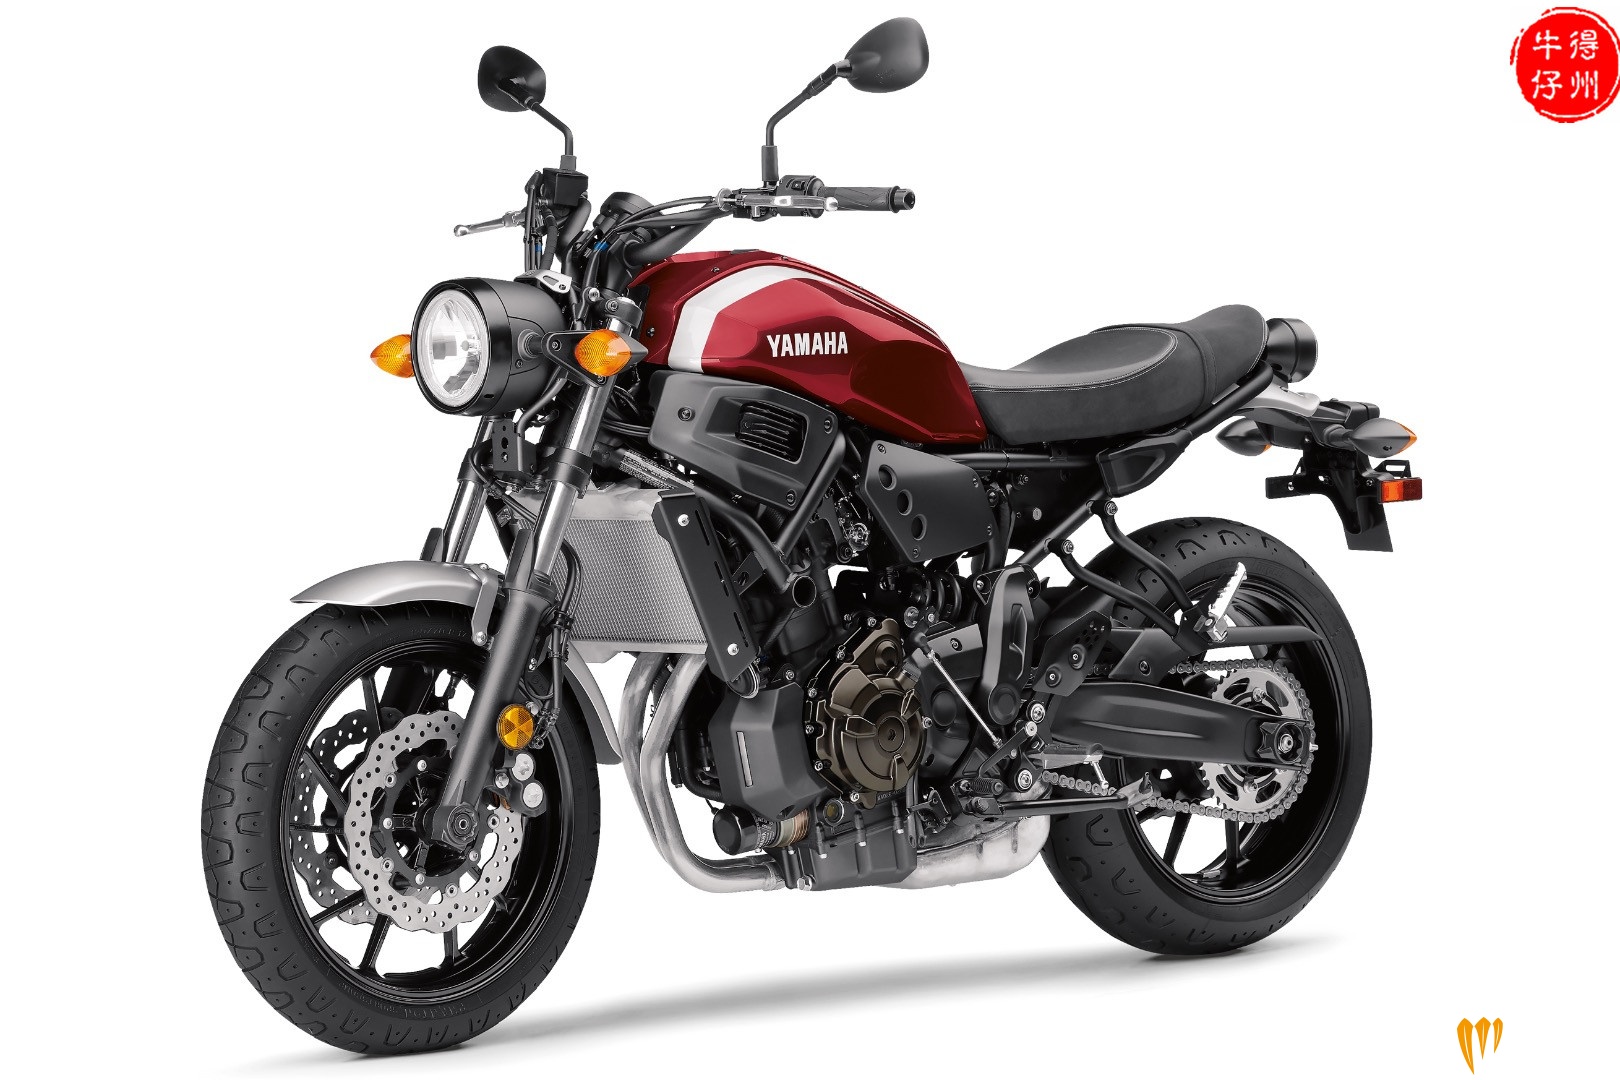 2018-Yamaha-XSR700-First-Look-Retro-Motorcycle-5.jpg